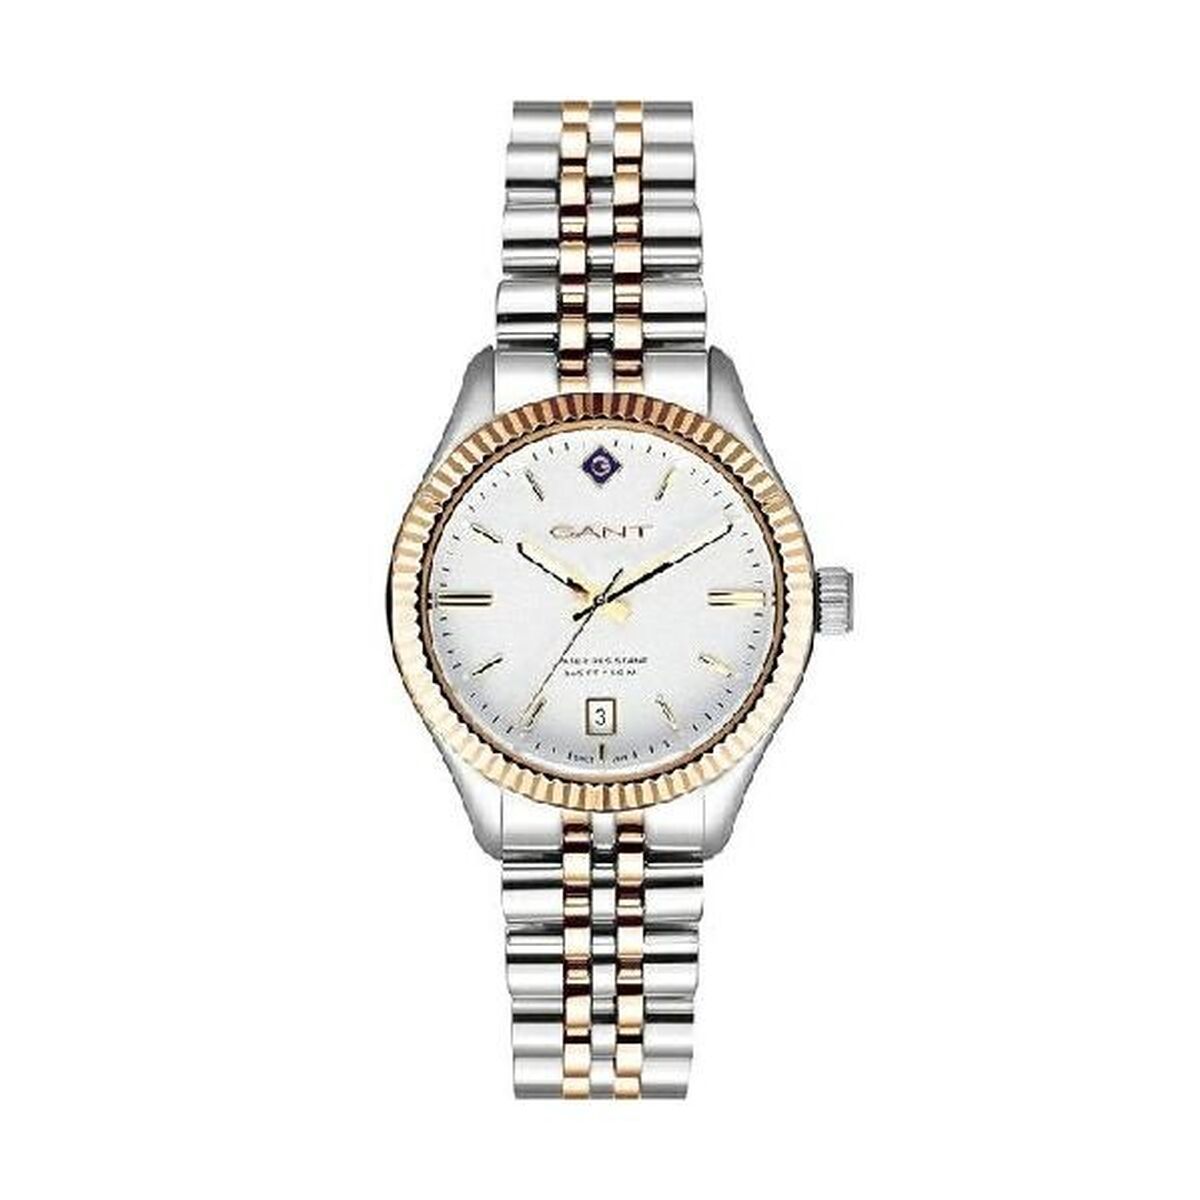 Horloge Dames Gant G136009